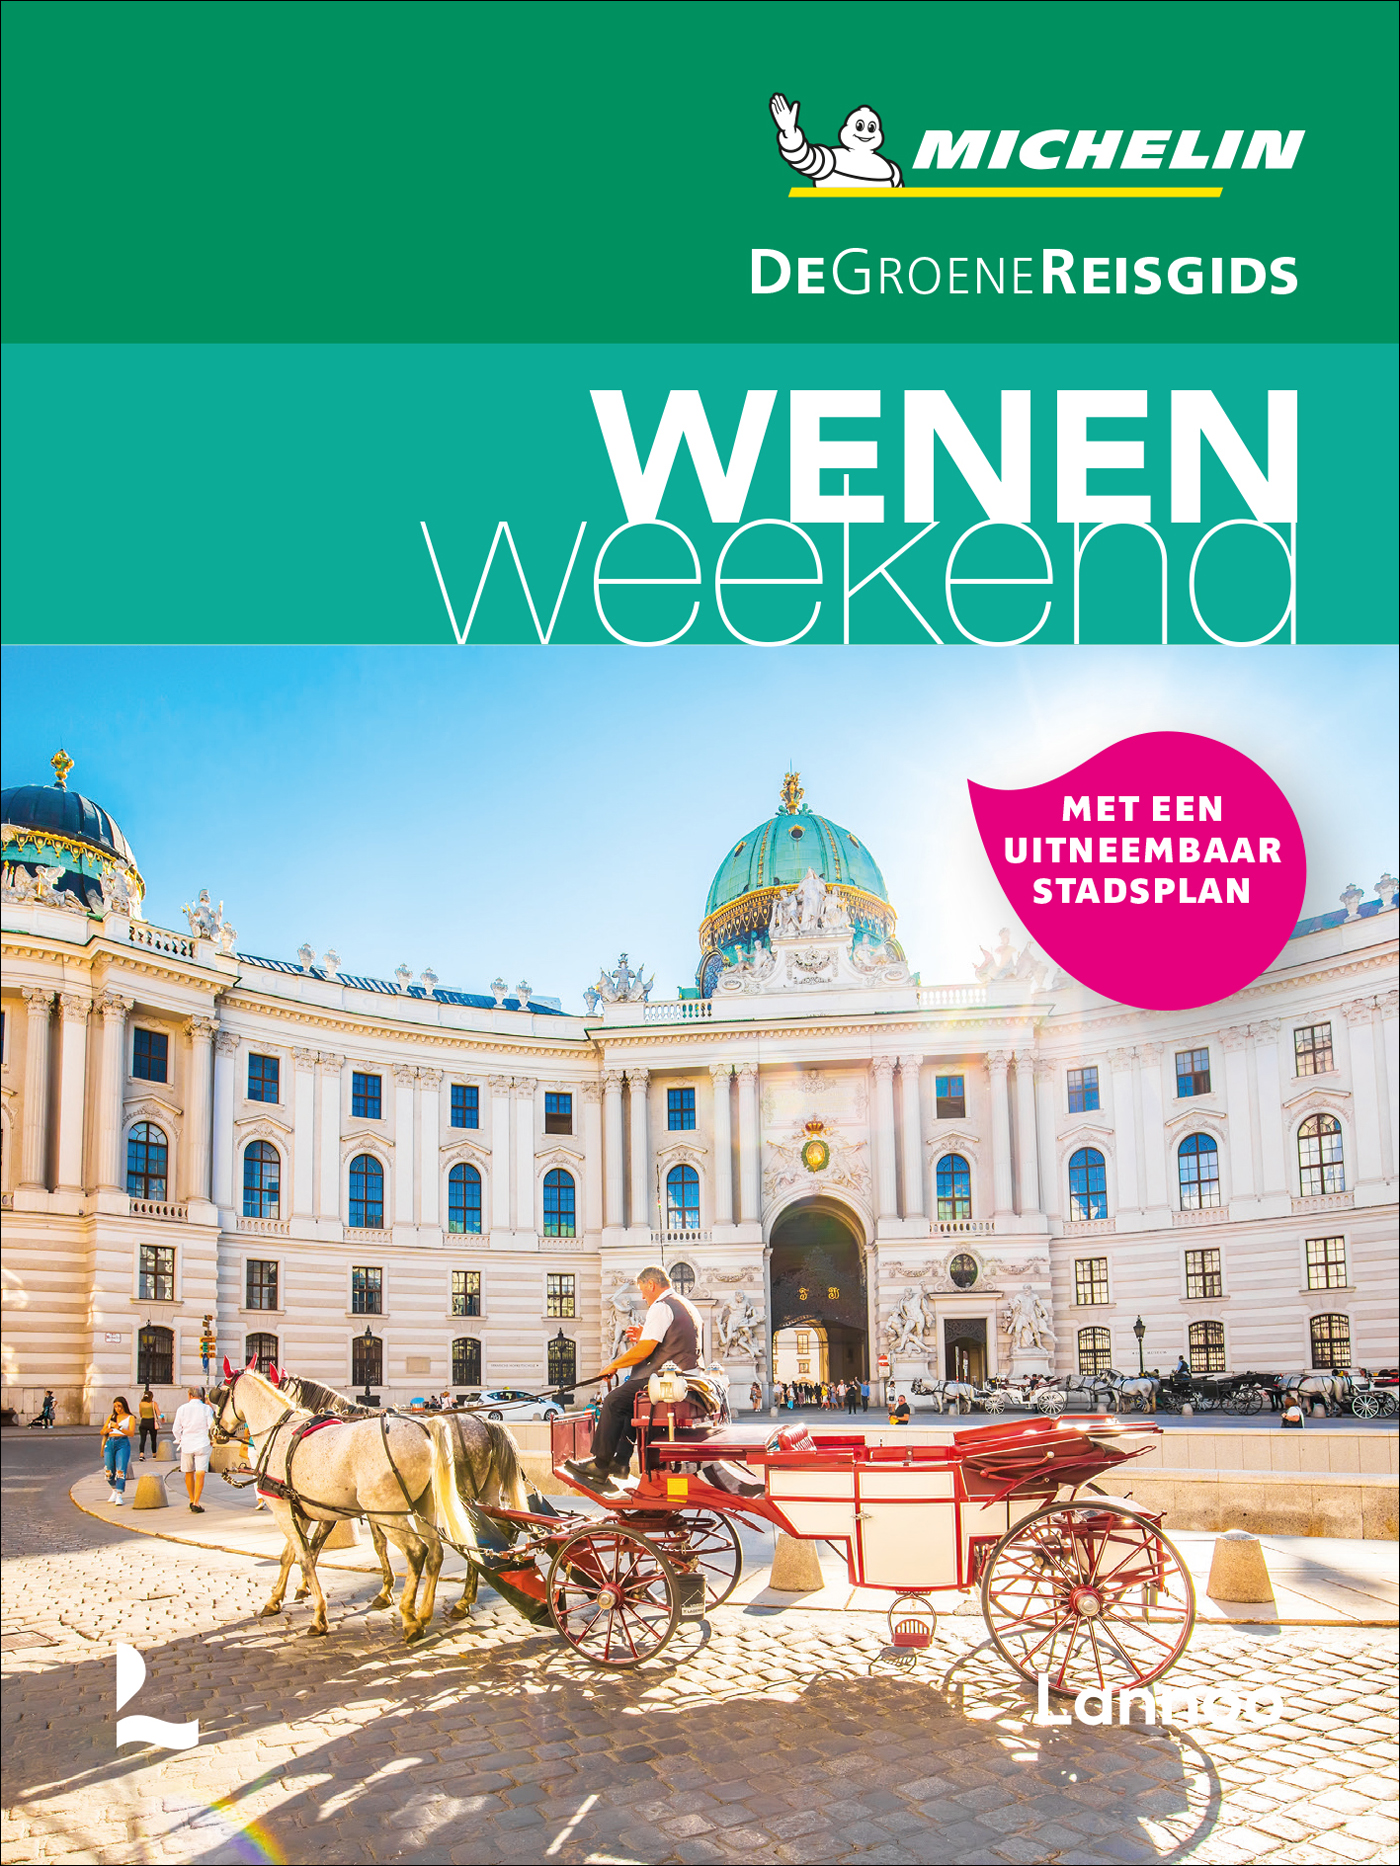 Online bestellen: Reisgids Michelin groene gids weekend Wenen | Lannoo